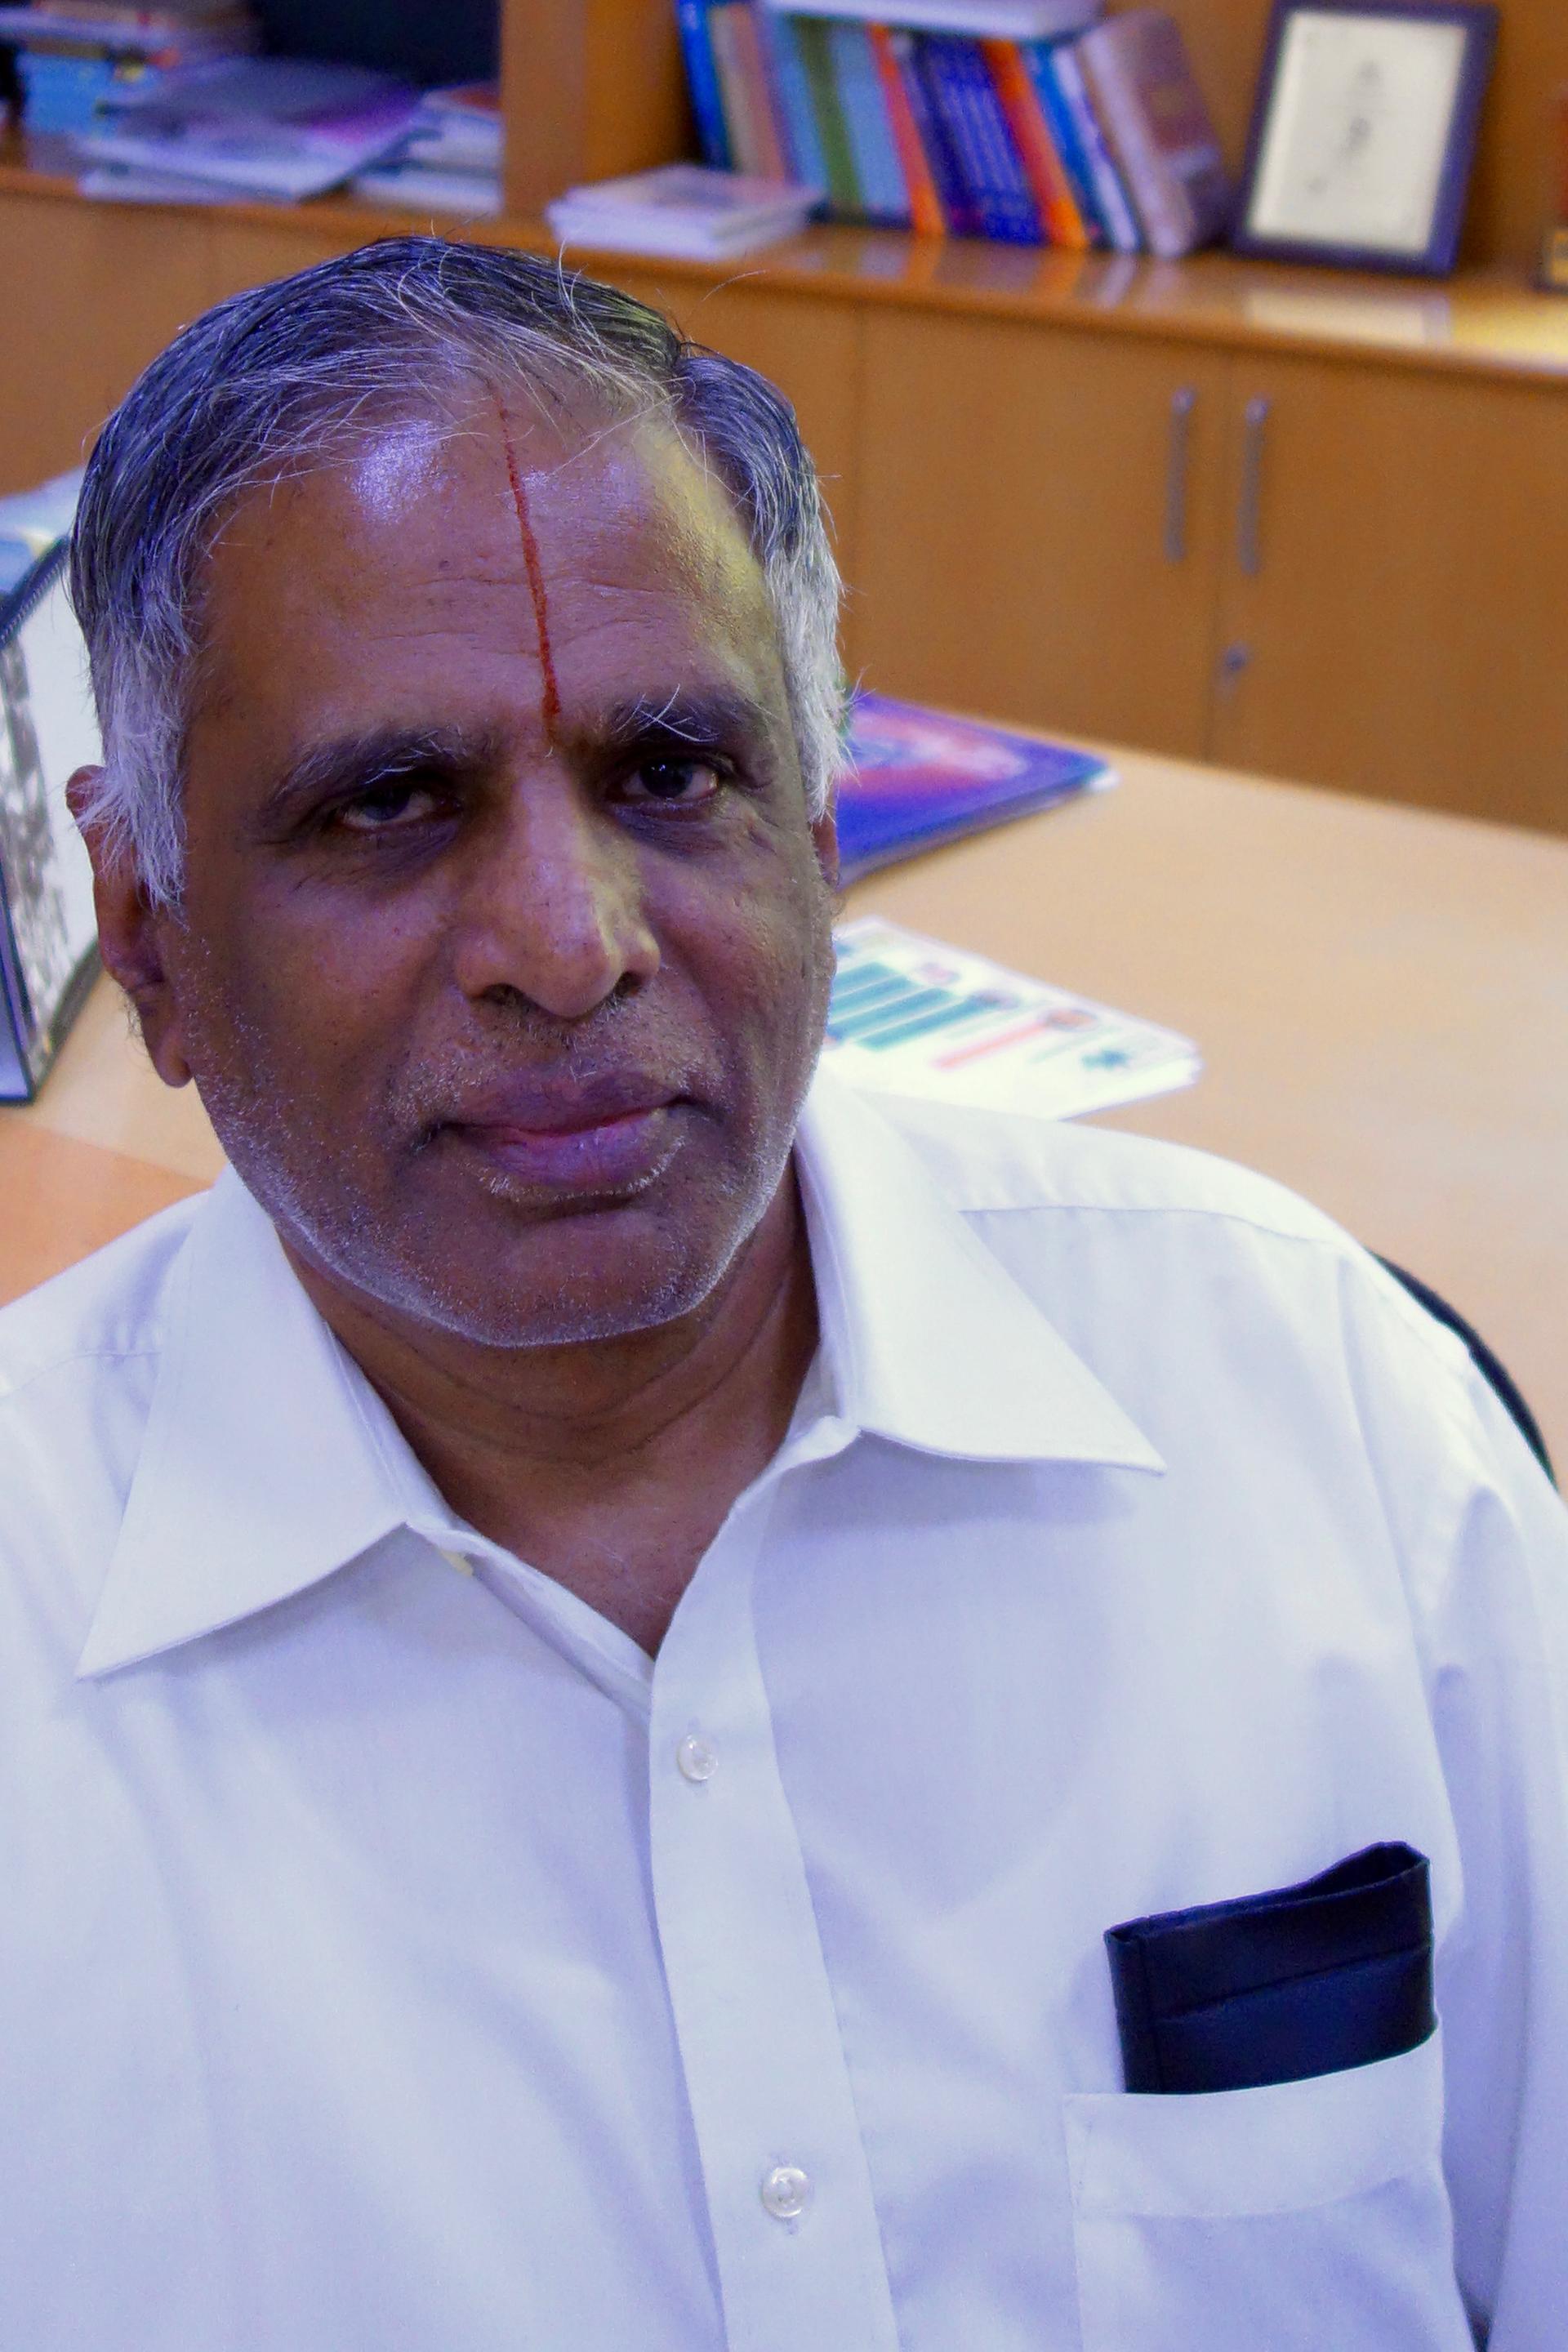 Professor S. Sadagopan heads Bangalore's International Institute for Information Technology